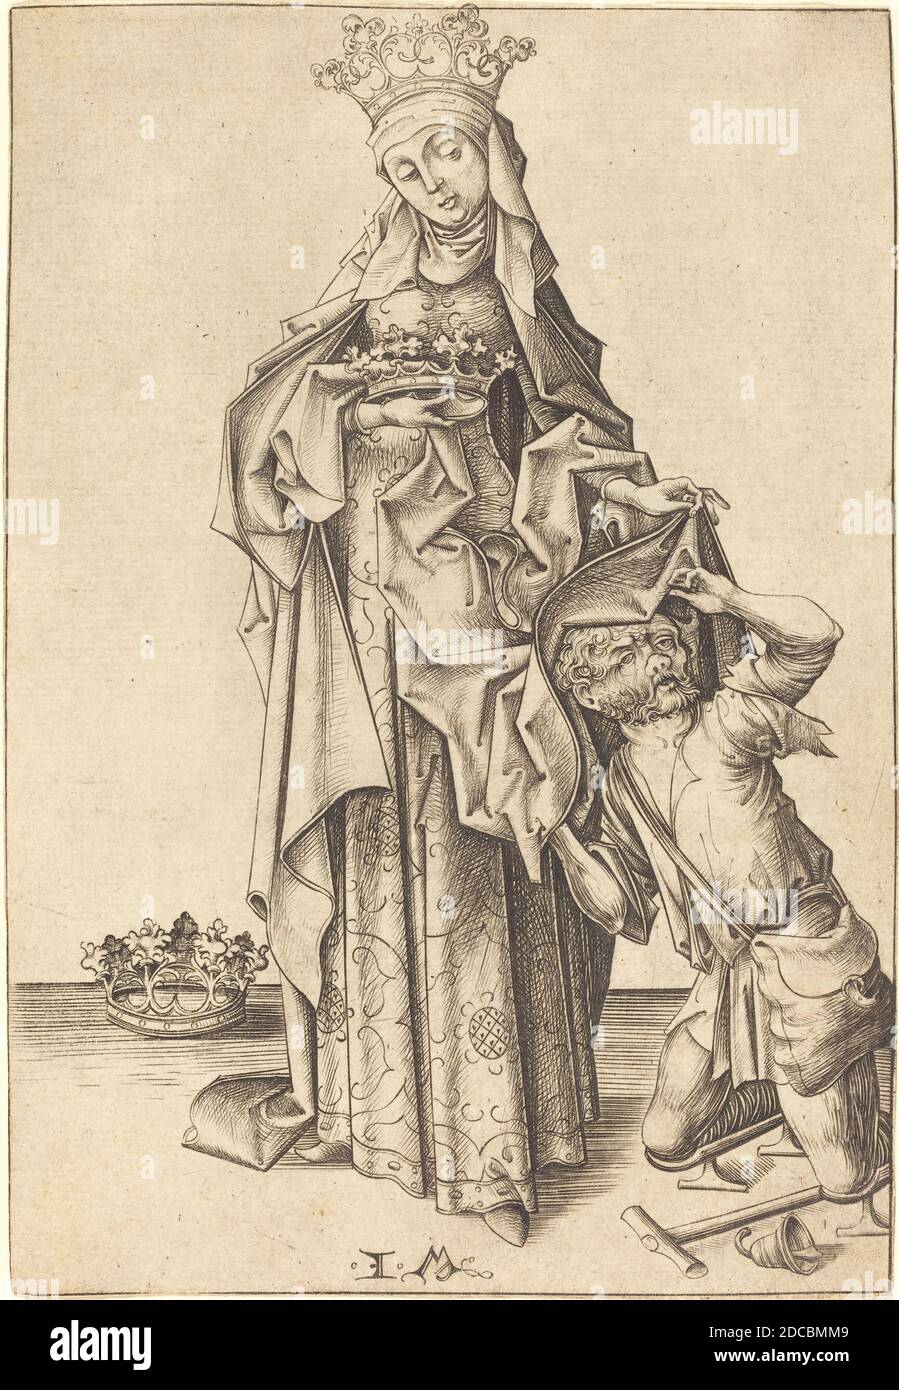 Israhel van Meckenem, (artist), German, c. 1445 - 1503, Saint Elizabeth of Thuringia, c. 1475/1480, engraving Stock Photo